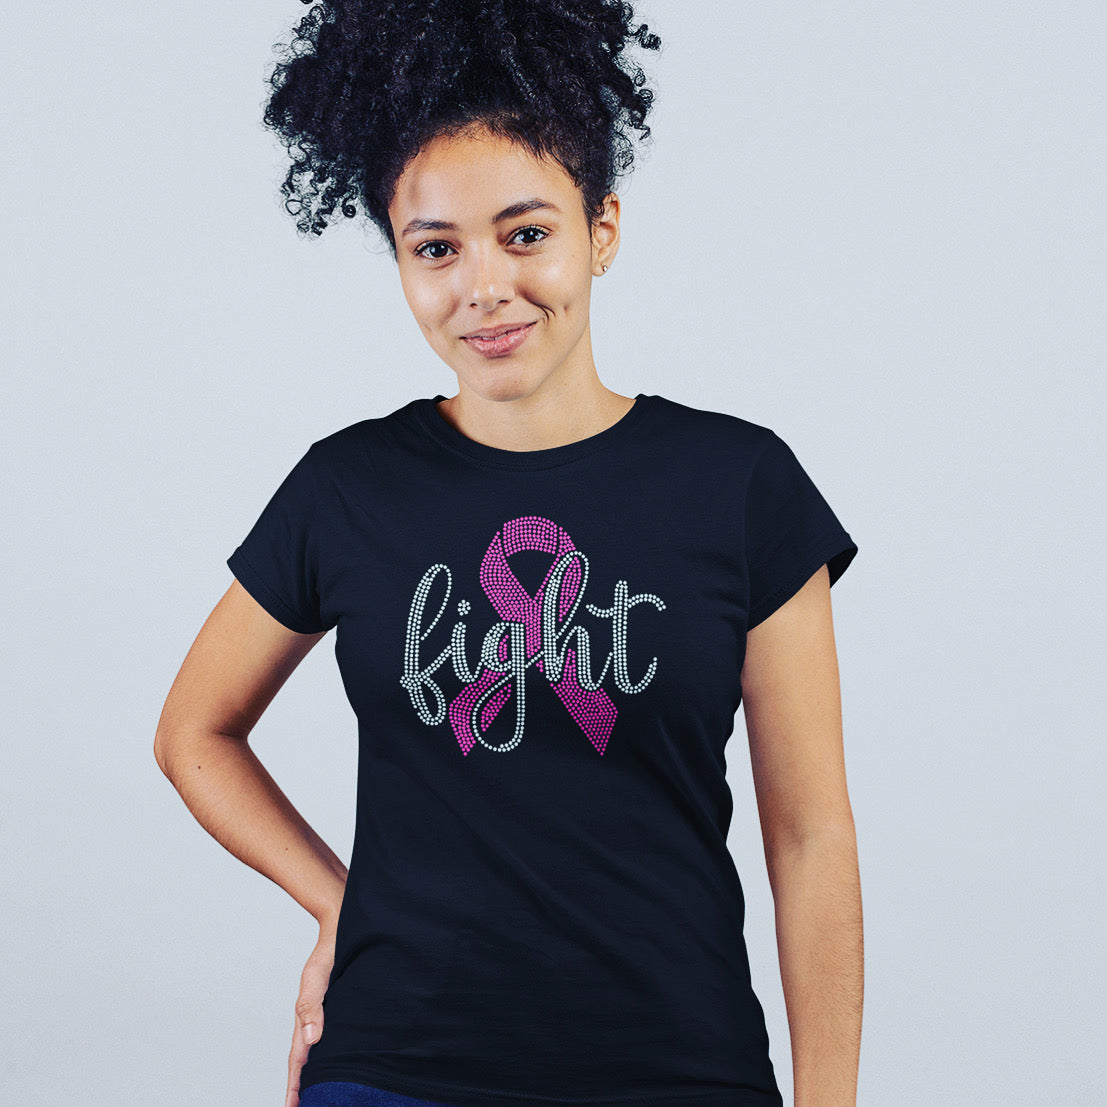 Cancer Fight Rhinestone Black Shirt